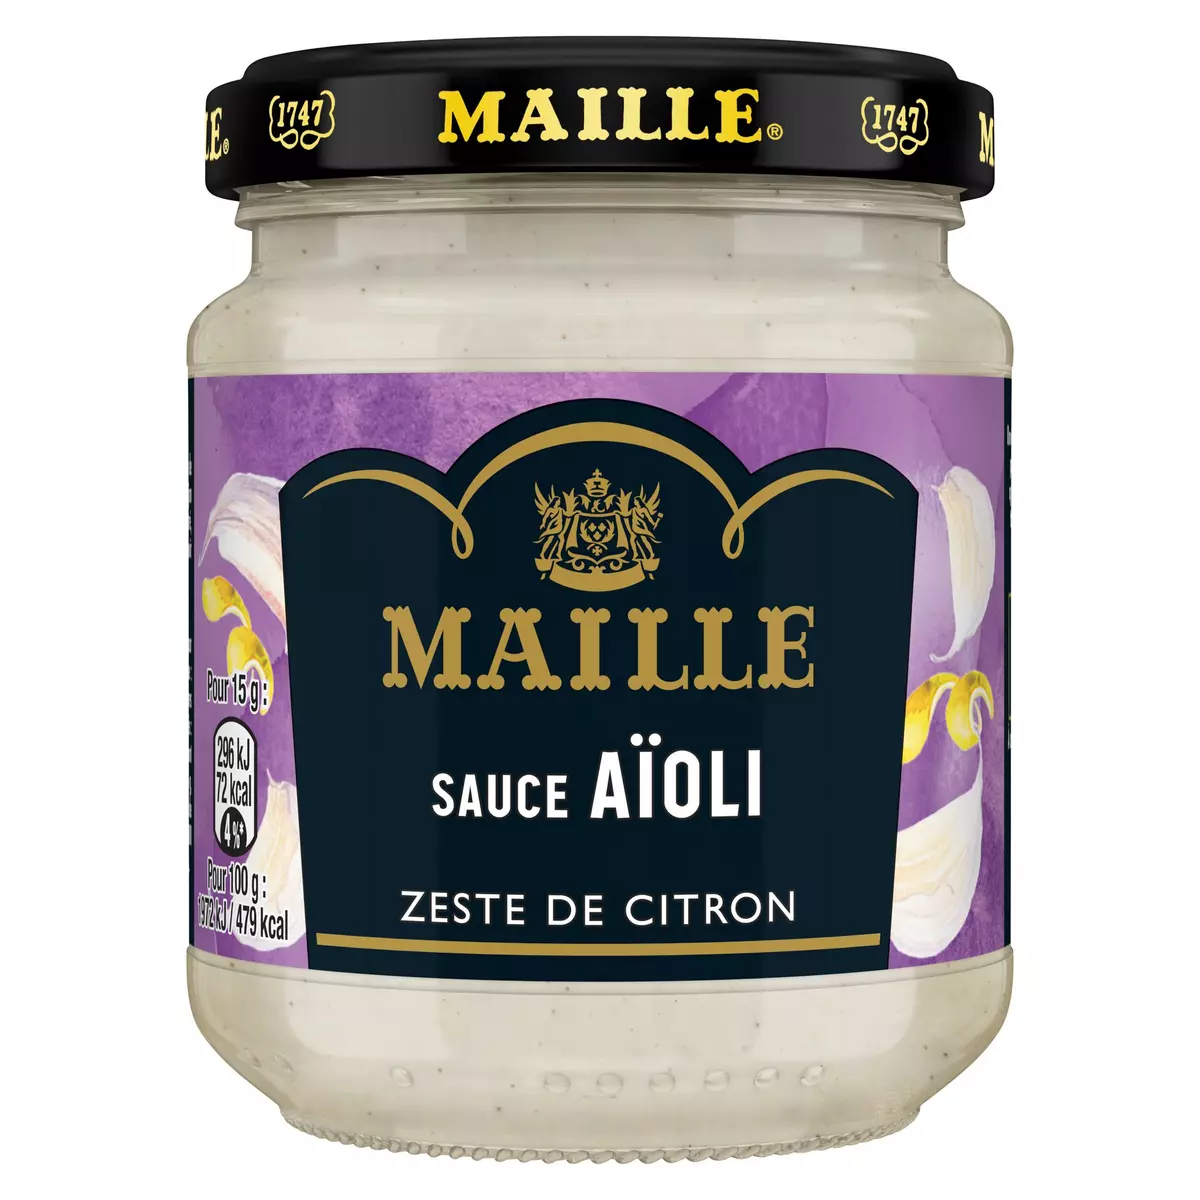 MAILLE Sauce aïoli en bocal 185g